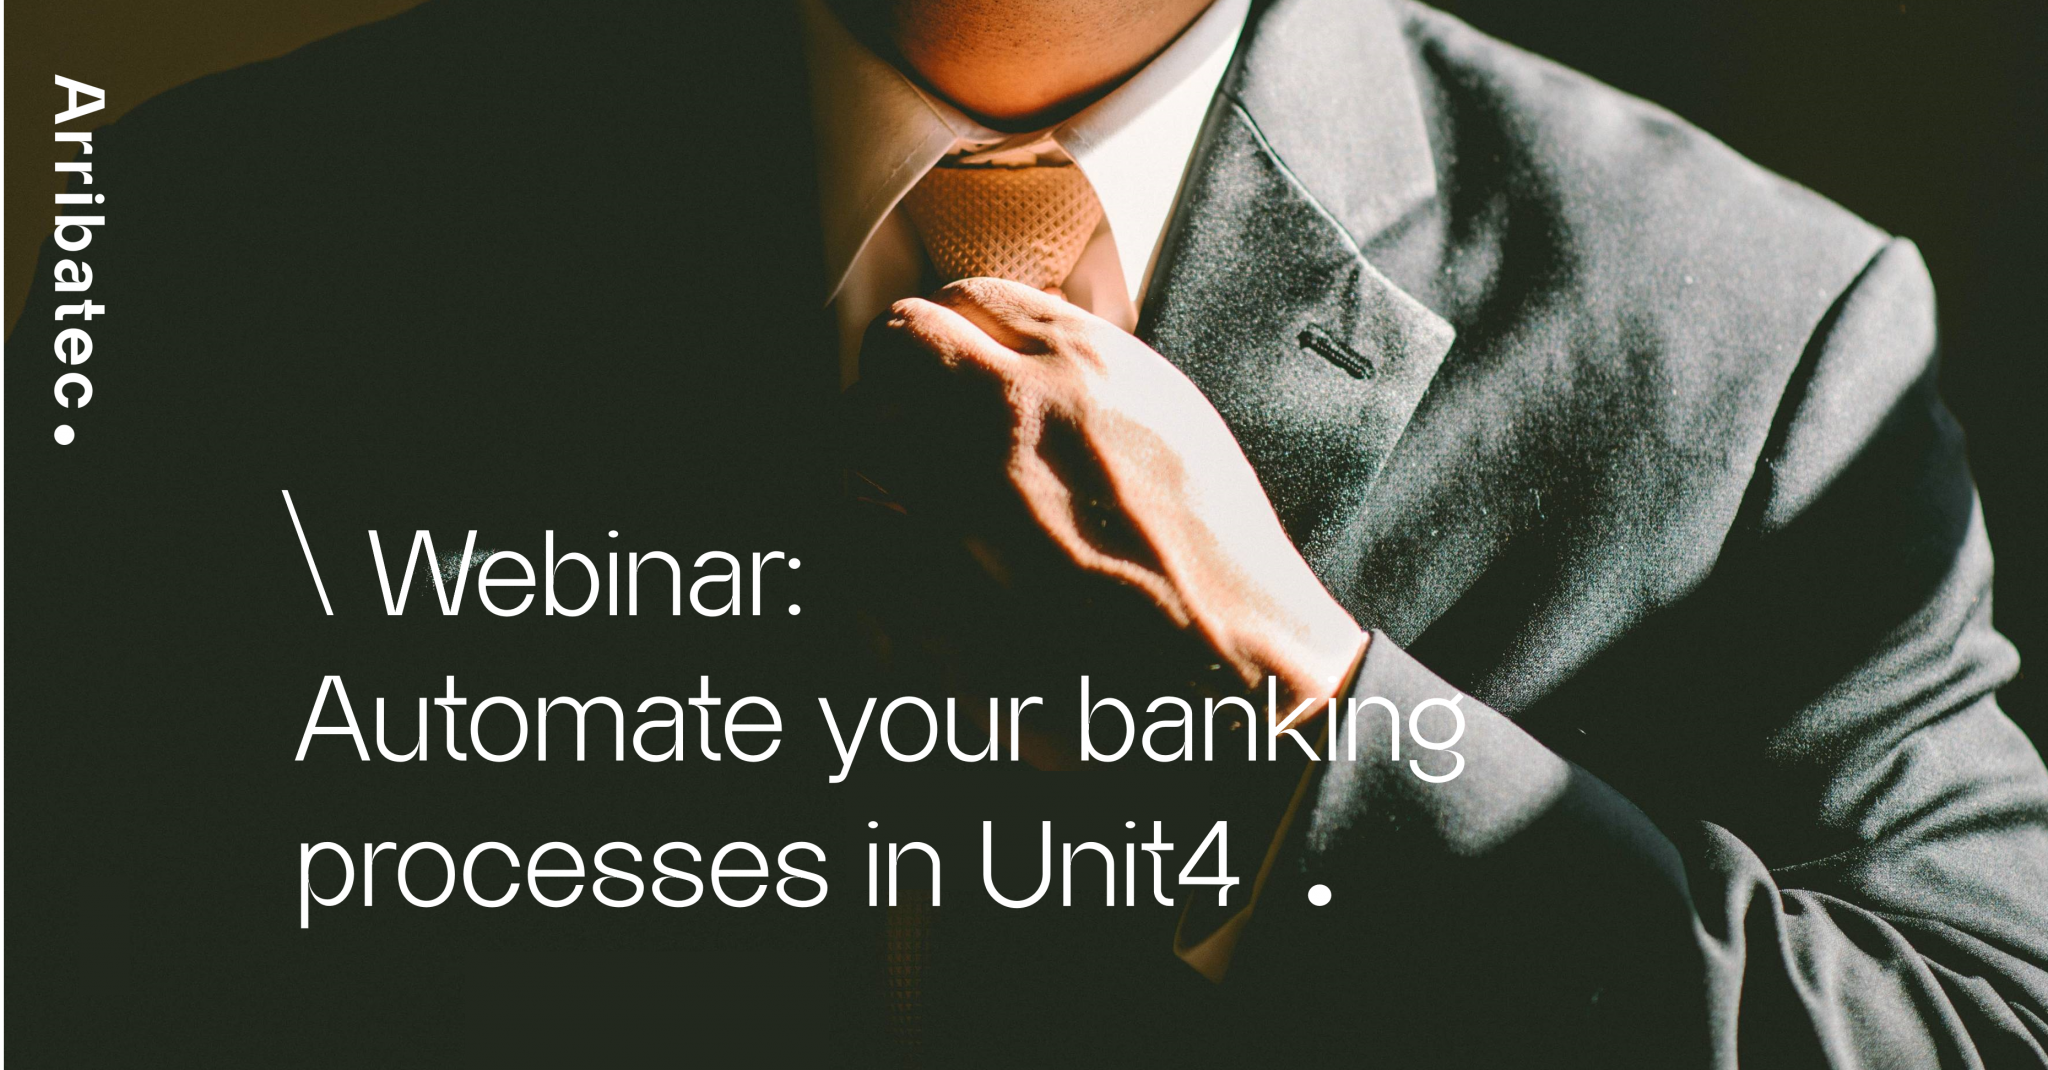 automate banking processes - Arribatec Bank Hub Webinar for automated banking processes in Unit4